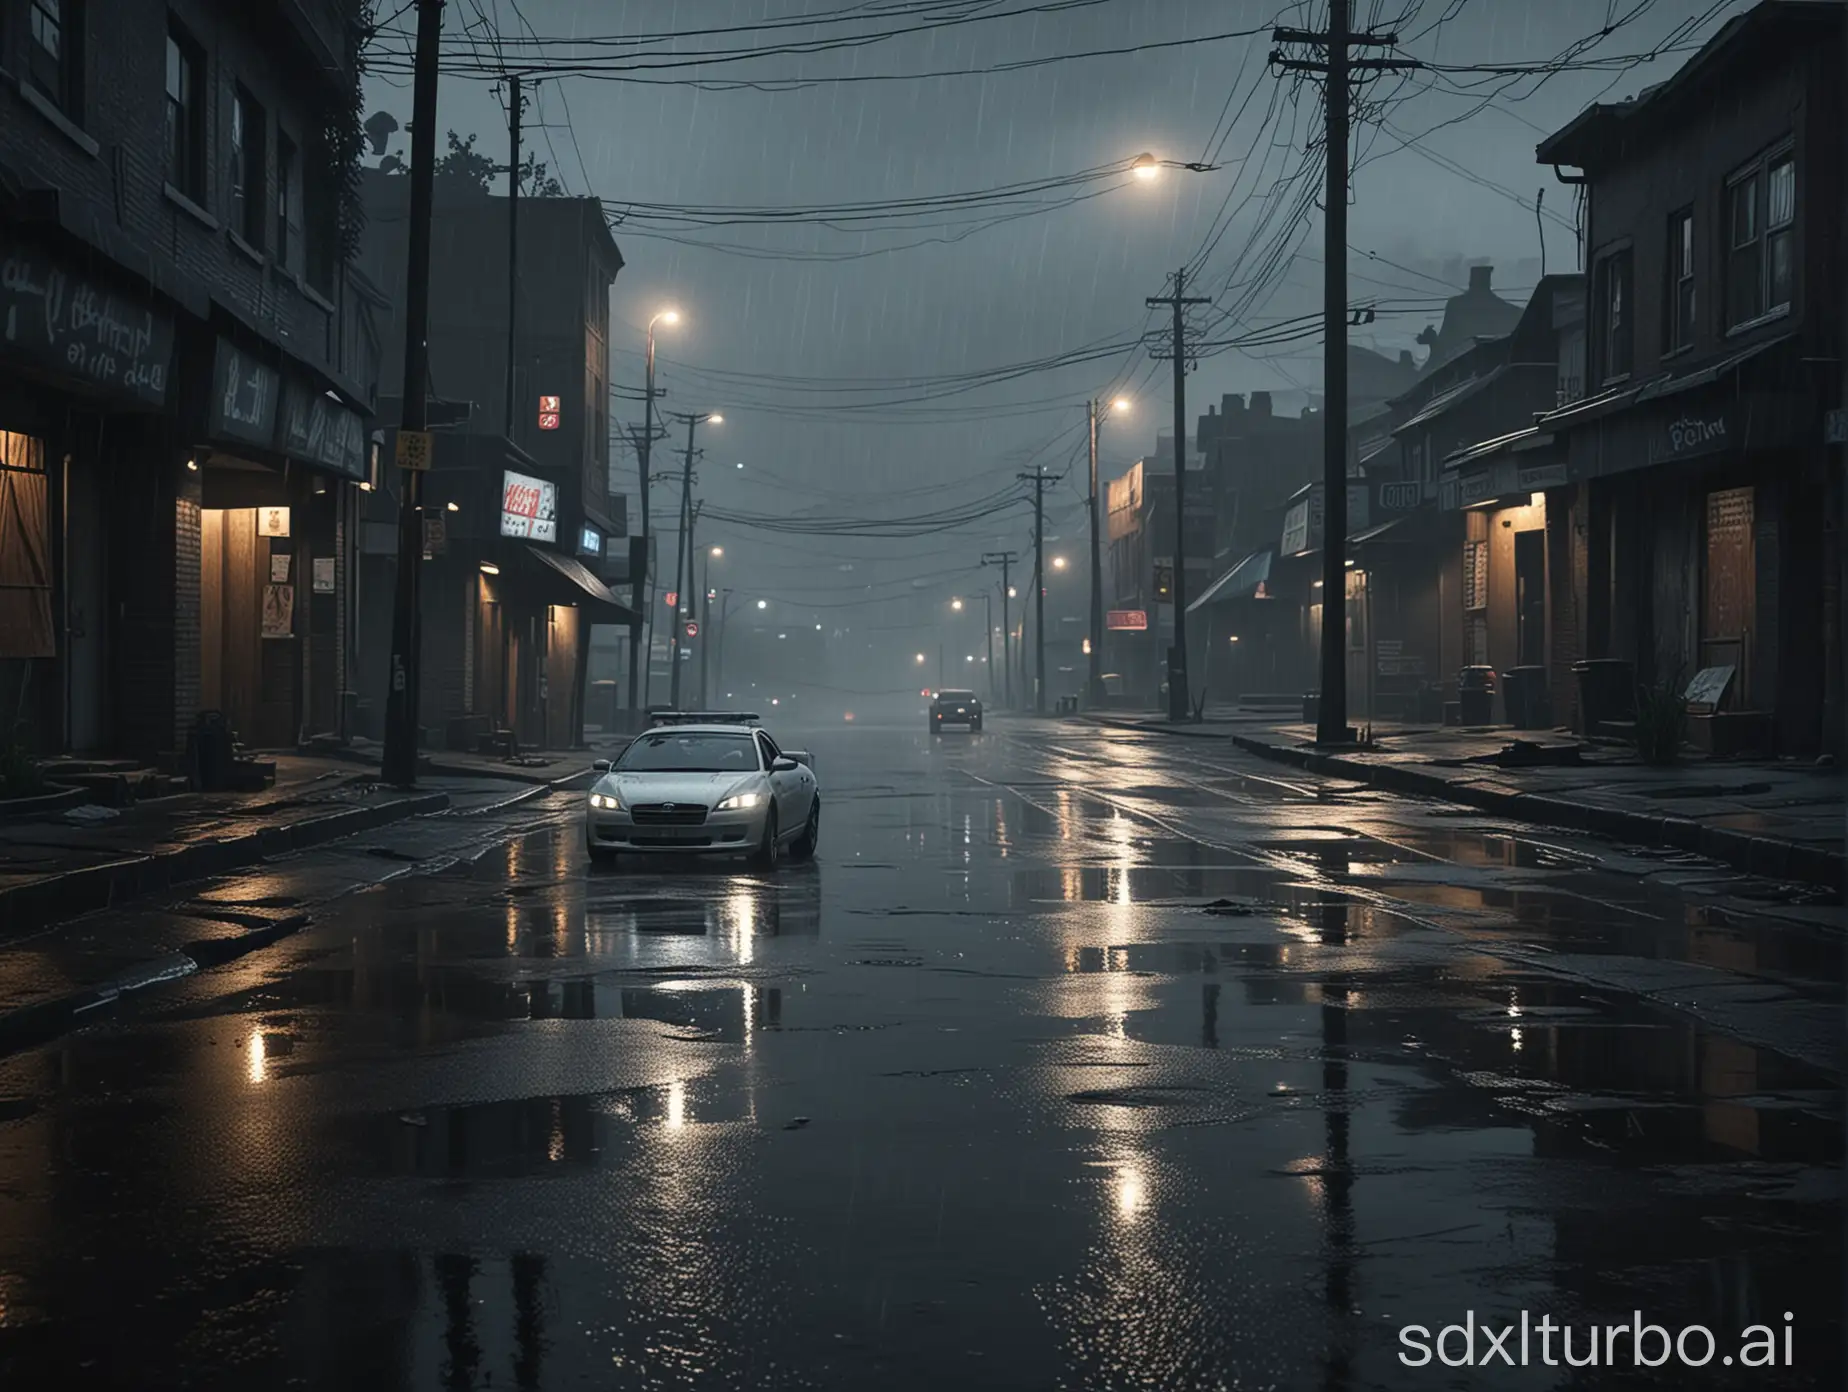 Dirty street in hood, rain, cinematic, dark ambiance, GTA style